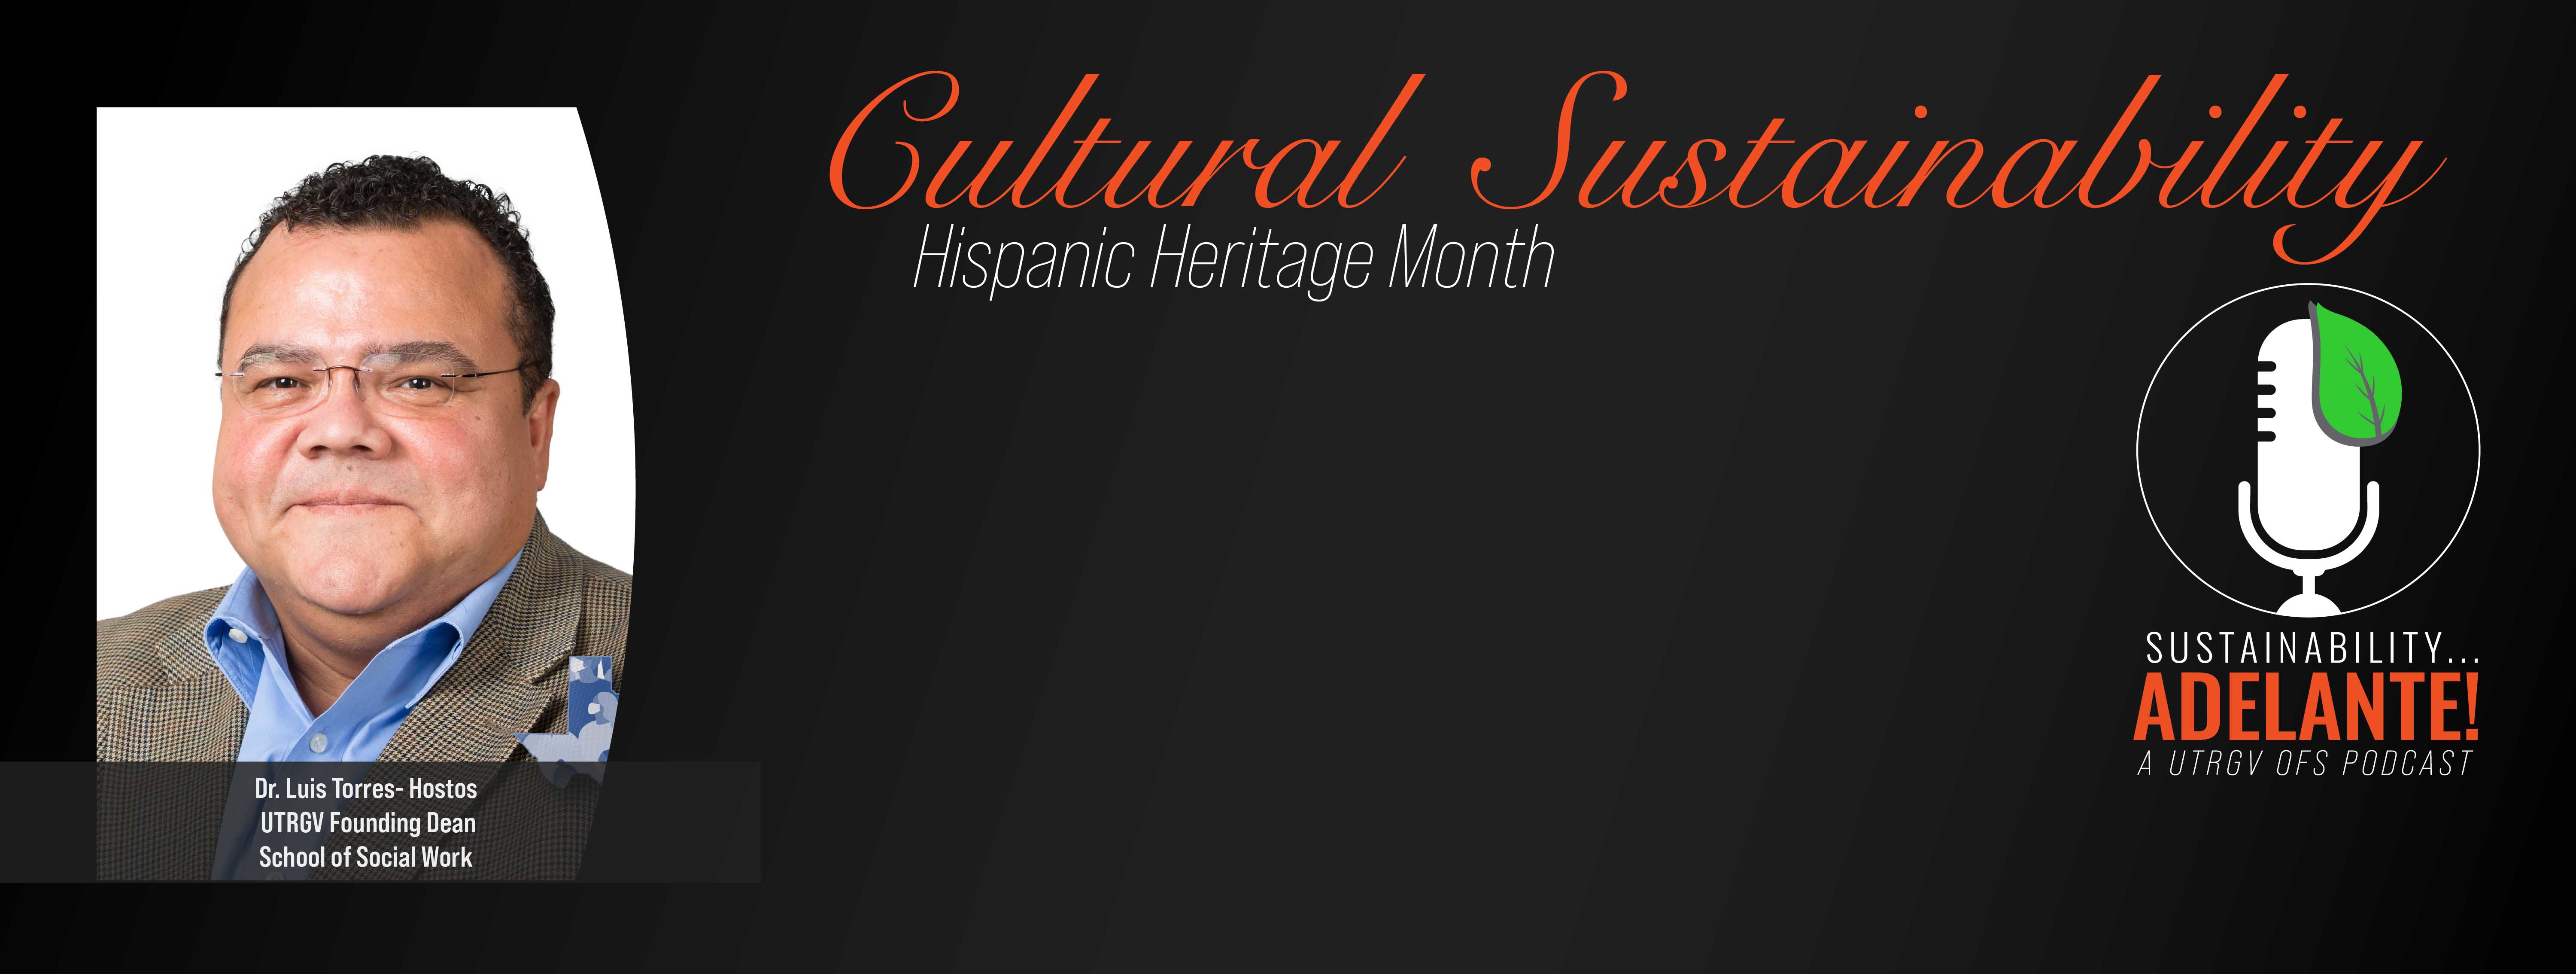 Cultural Sustainability Hispanic Heritage Month. Dr. Luis Torres Hostos UTRGV Founding Dean School of Social Work. Sustainability Adelante! A UTRGV OFS Podcast